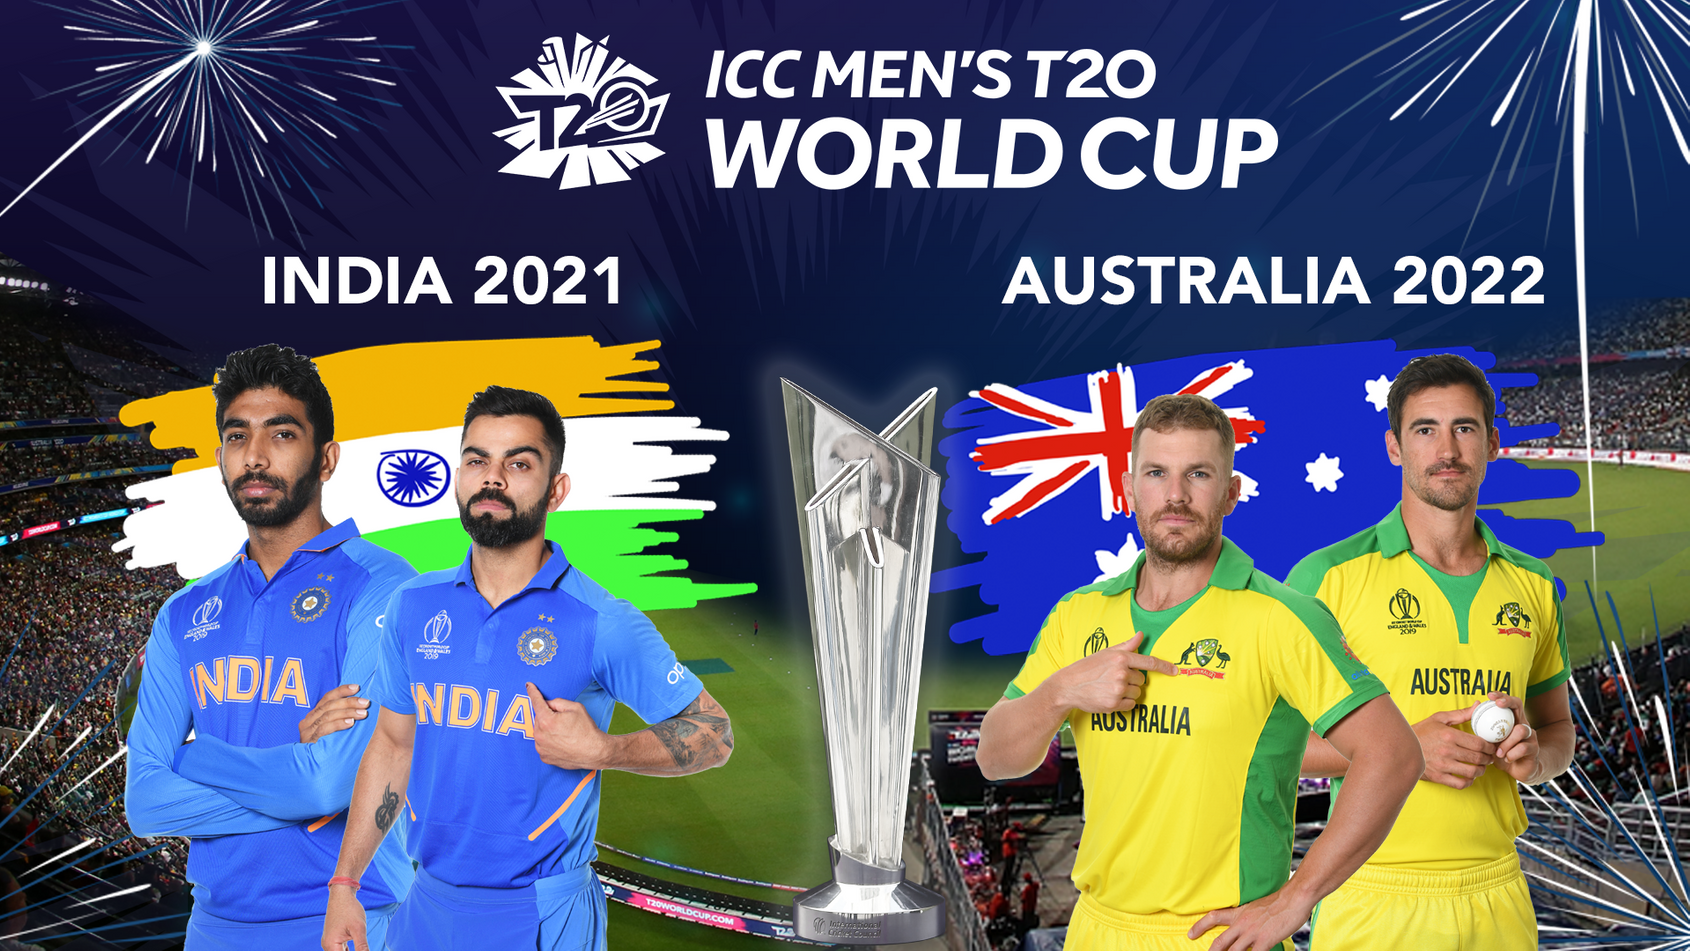 ICC Men s T20 World Cup IND 2021 H